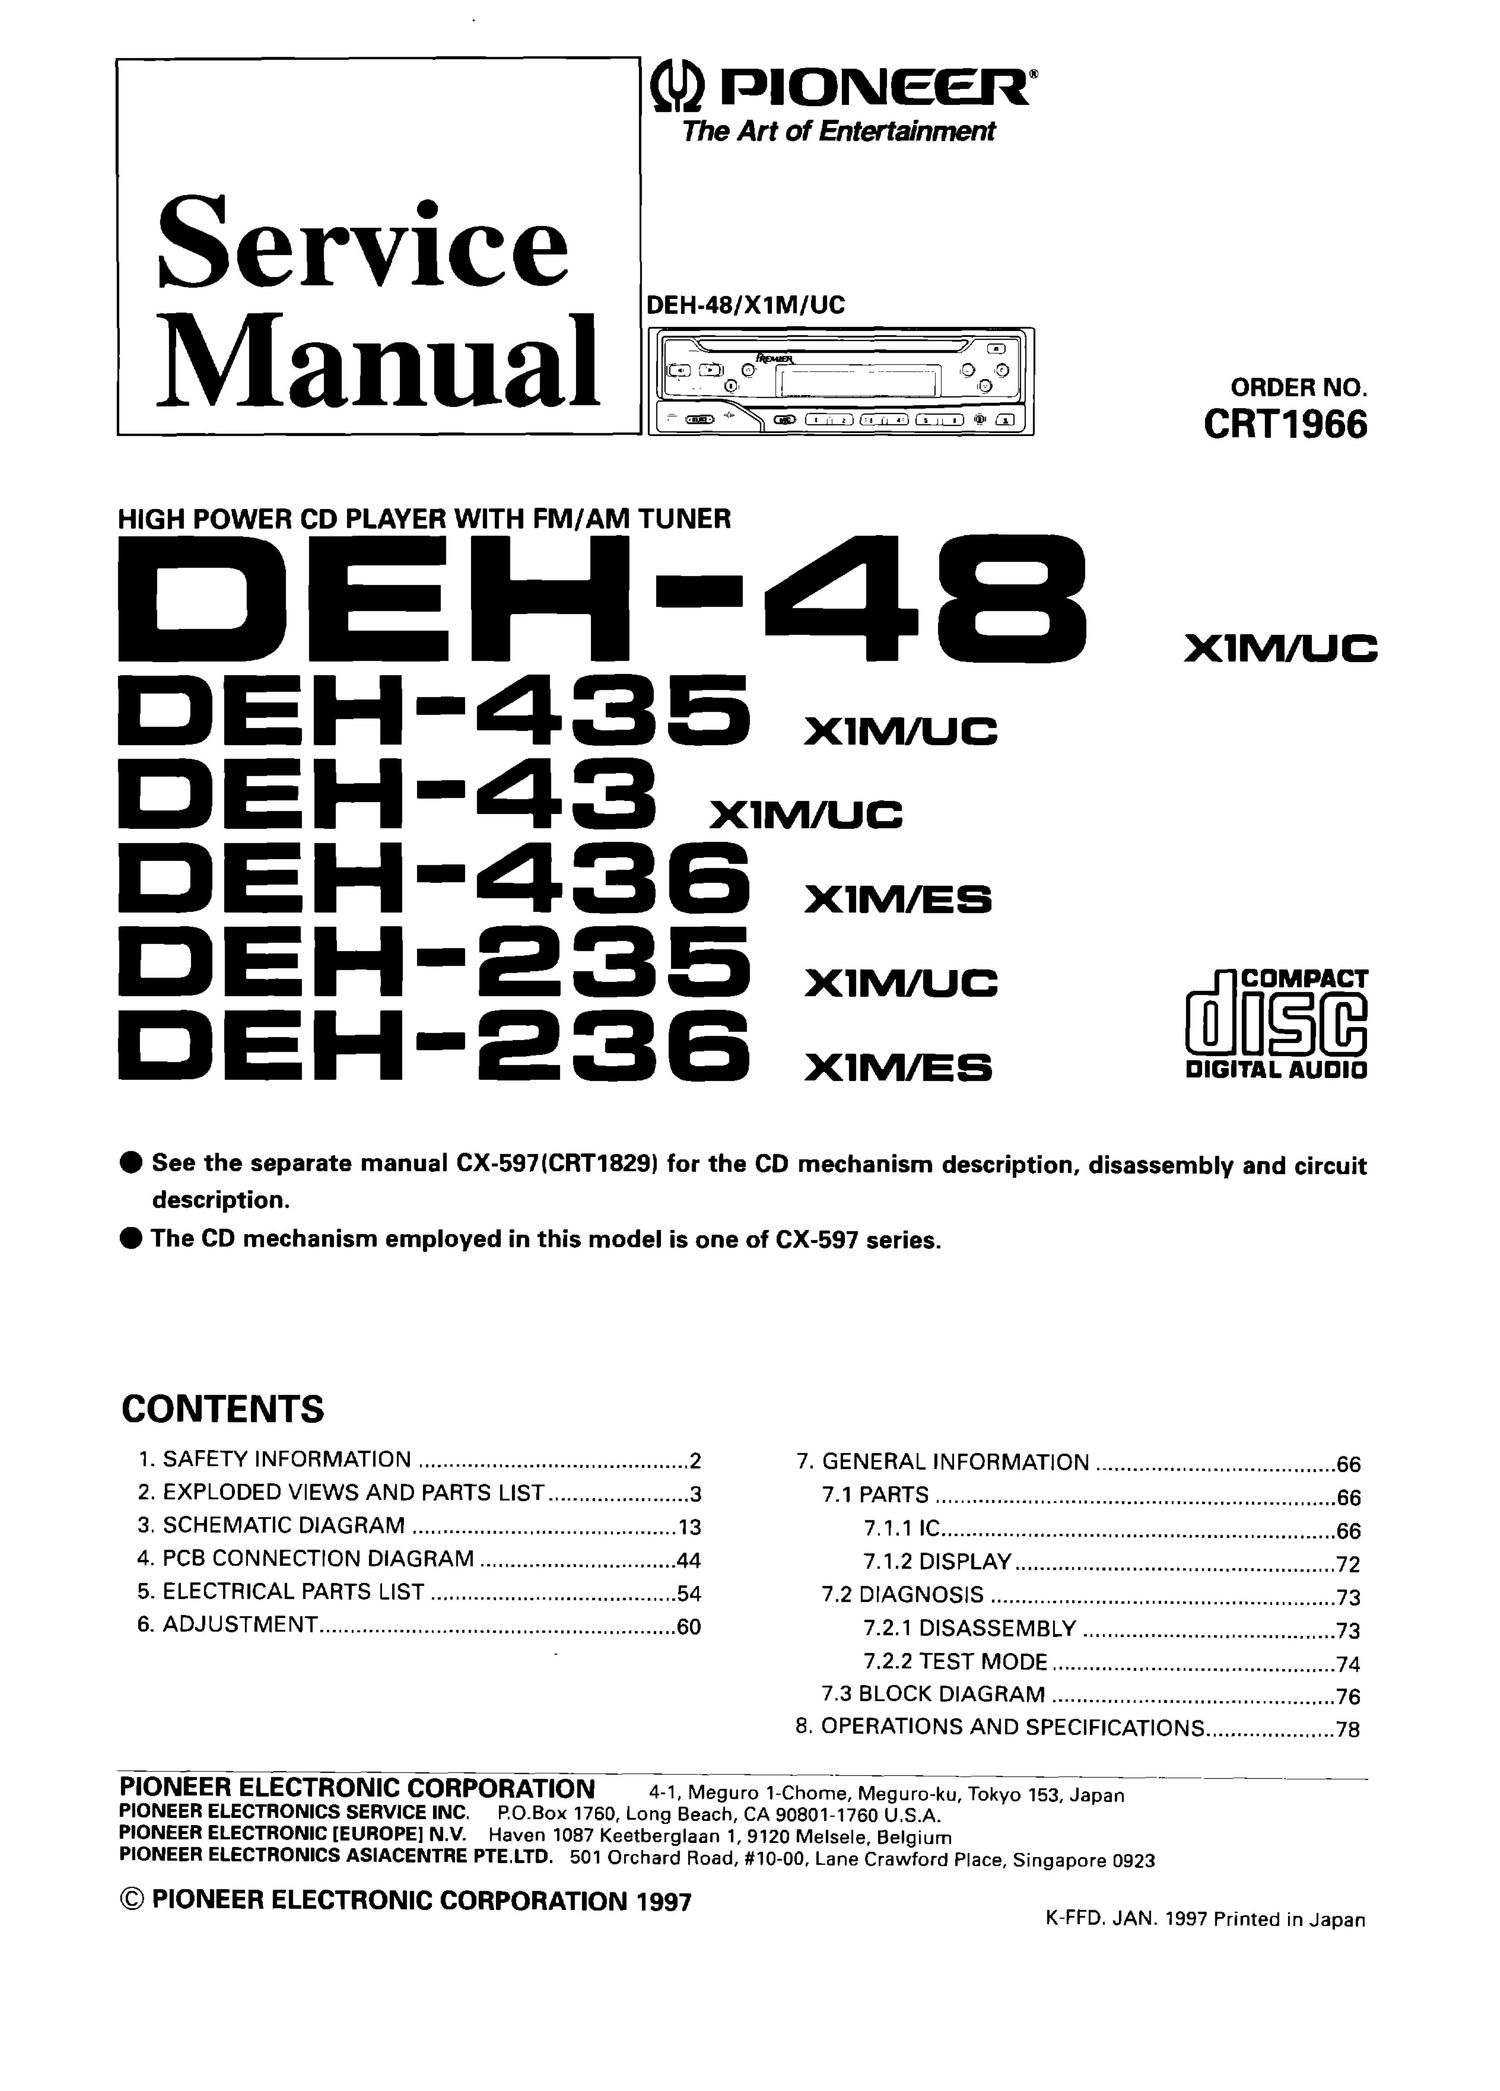 pioneer deh 435 service manual